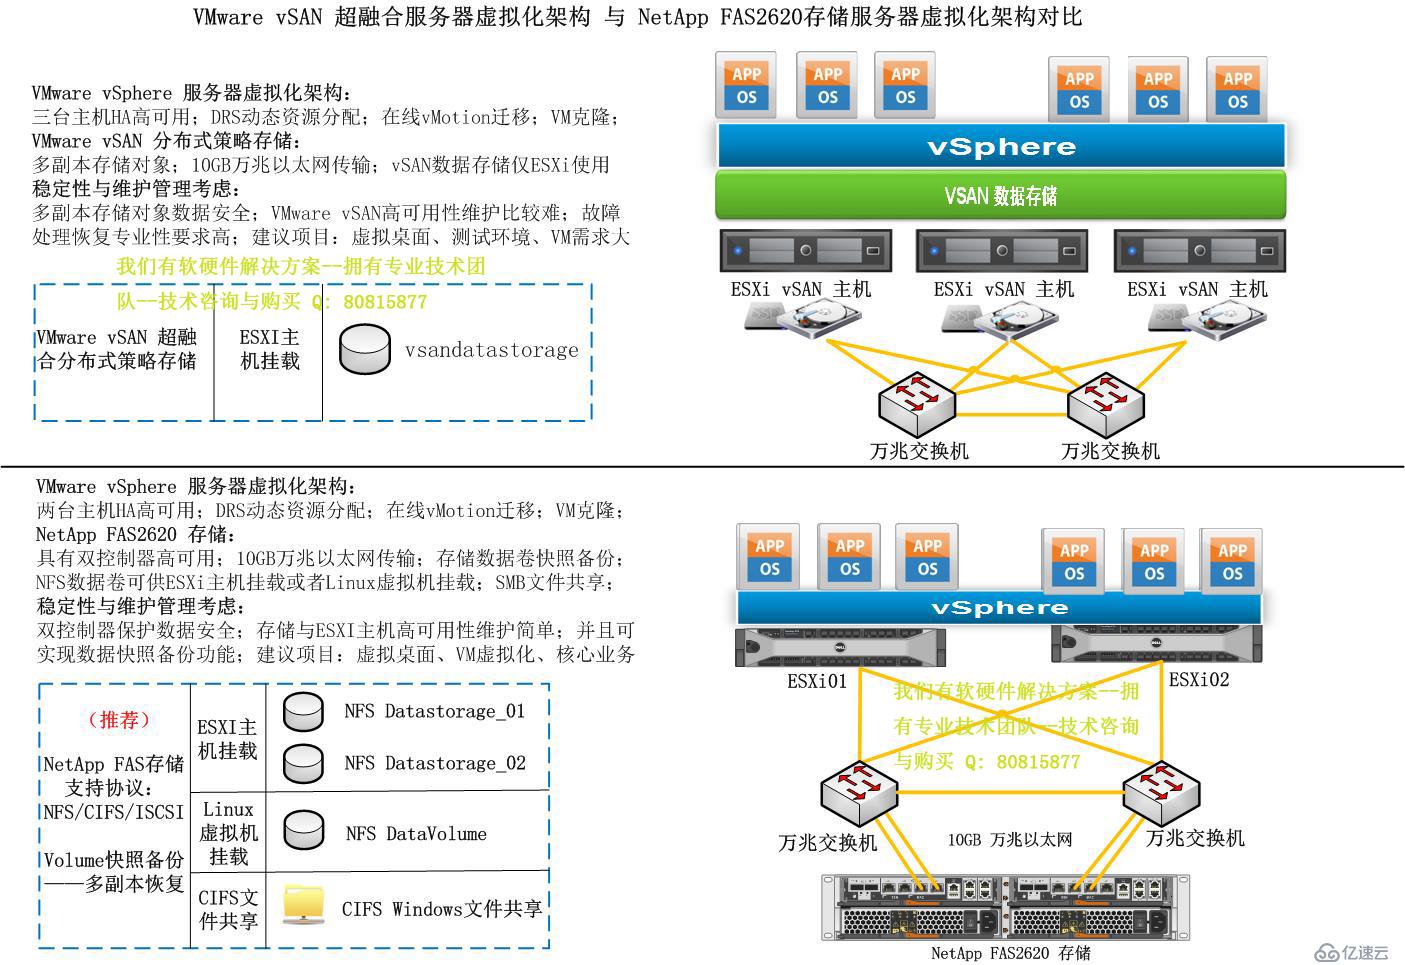  VMware vSAN超融合虚拟化架构与NetApp FAS2620存储服务器虚拟化架构对比